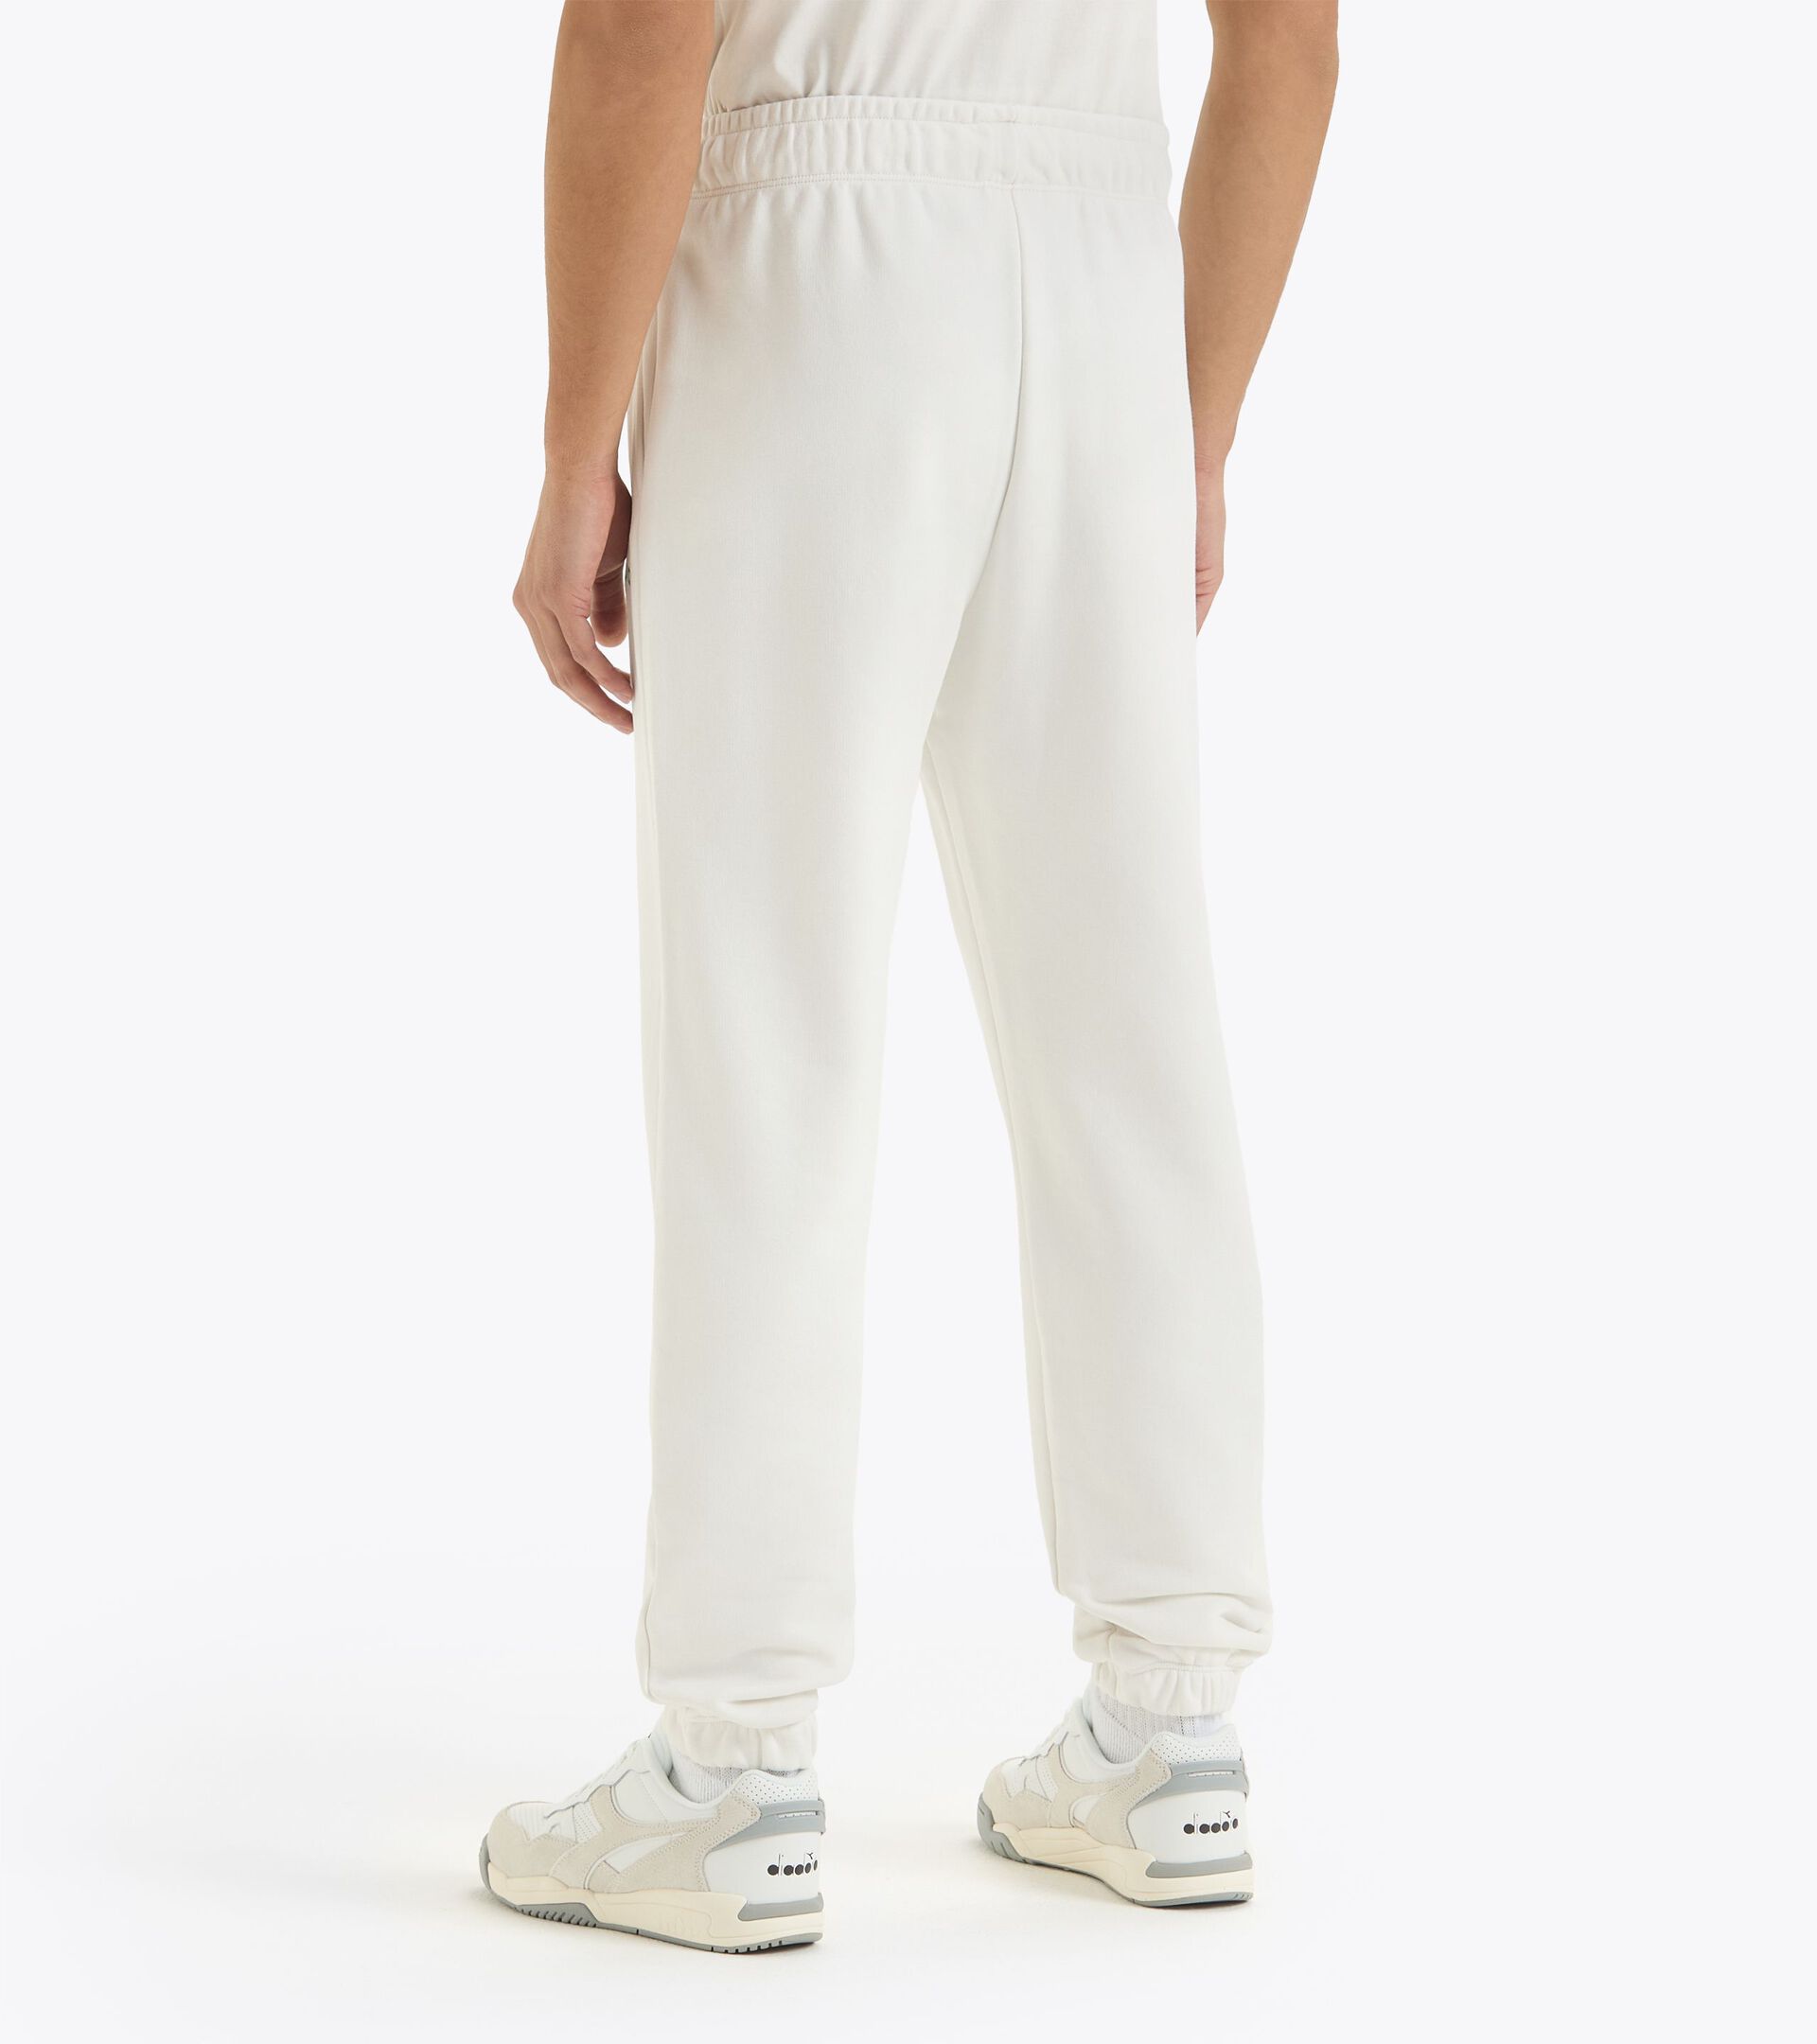 Sweatpants - Gender Neutral PANTS ATHL. LOGO WHITE MILK - Diadora